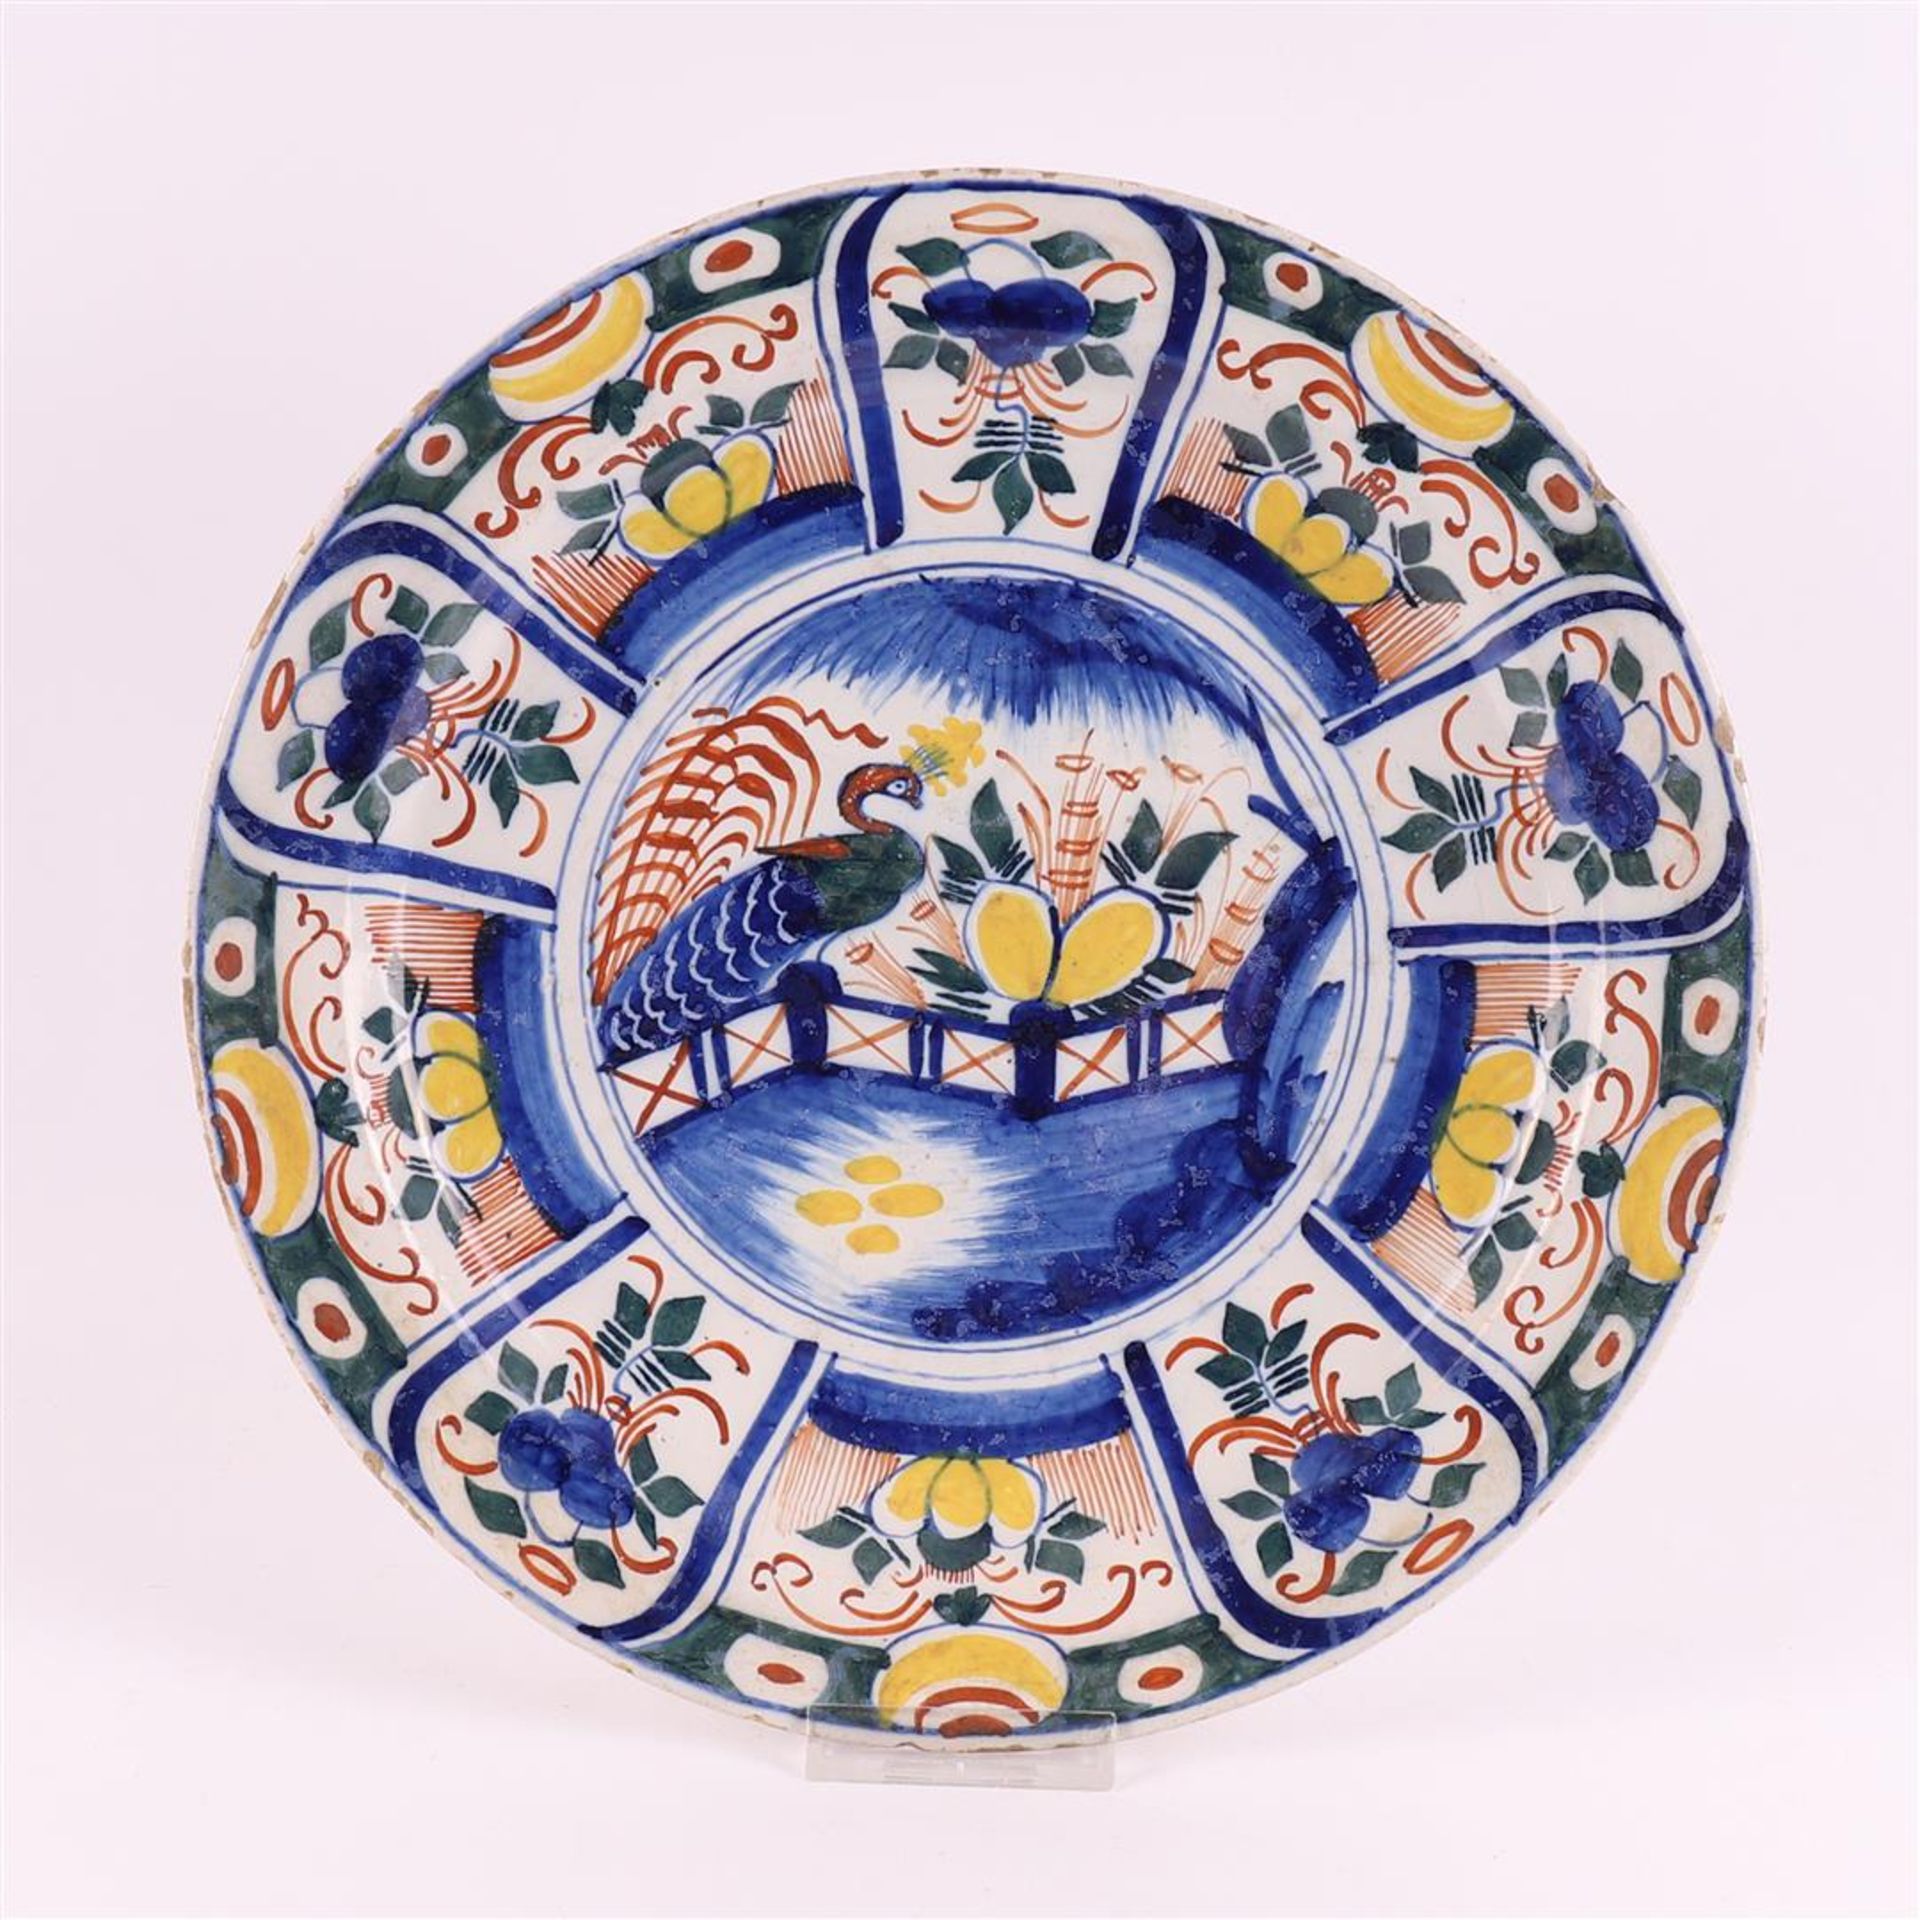 A polychrome Delft earthenware dish, 18th century.